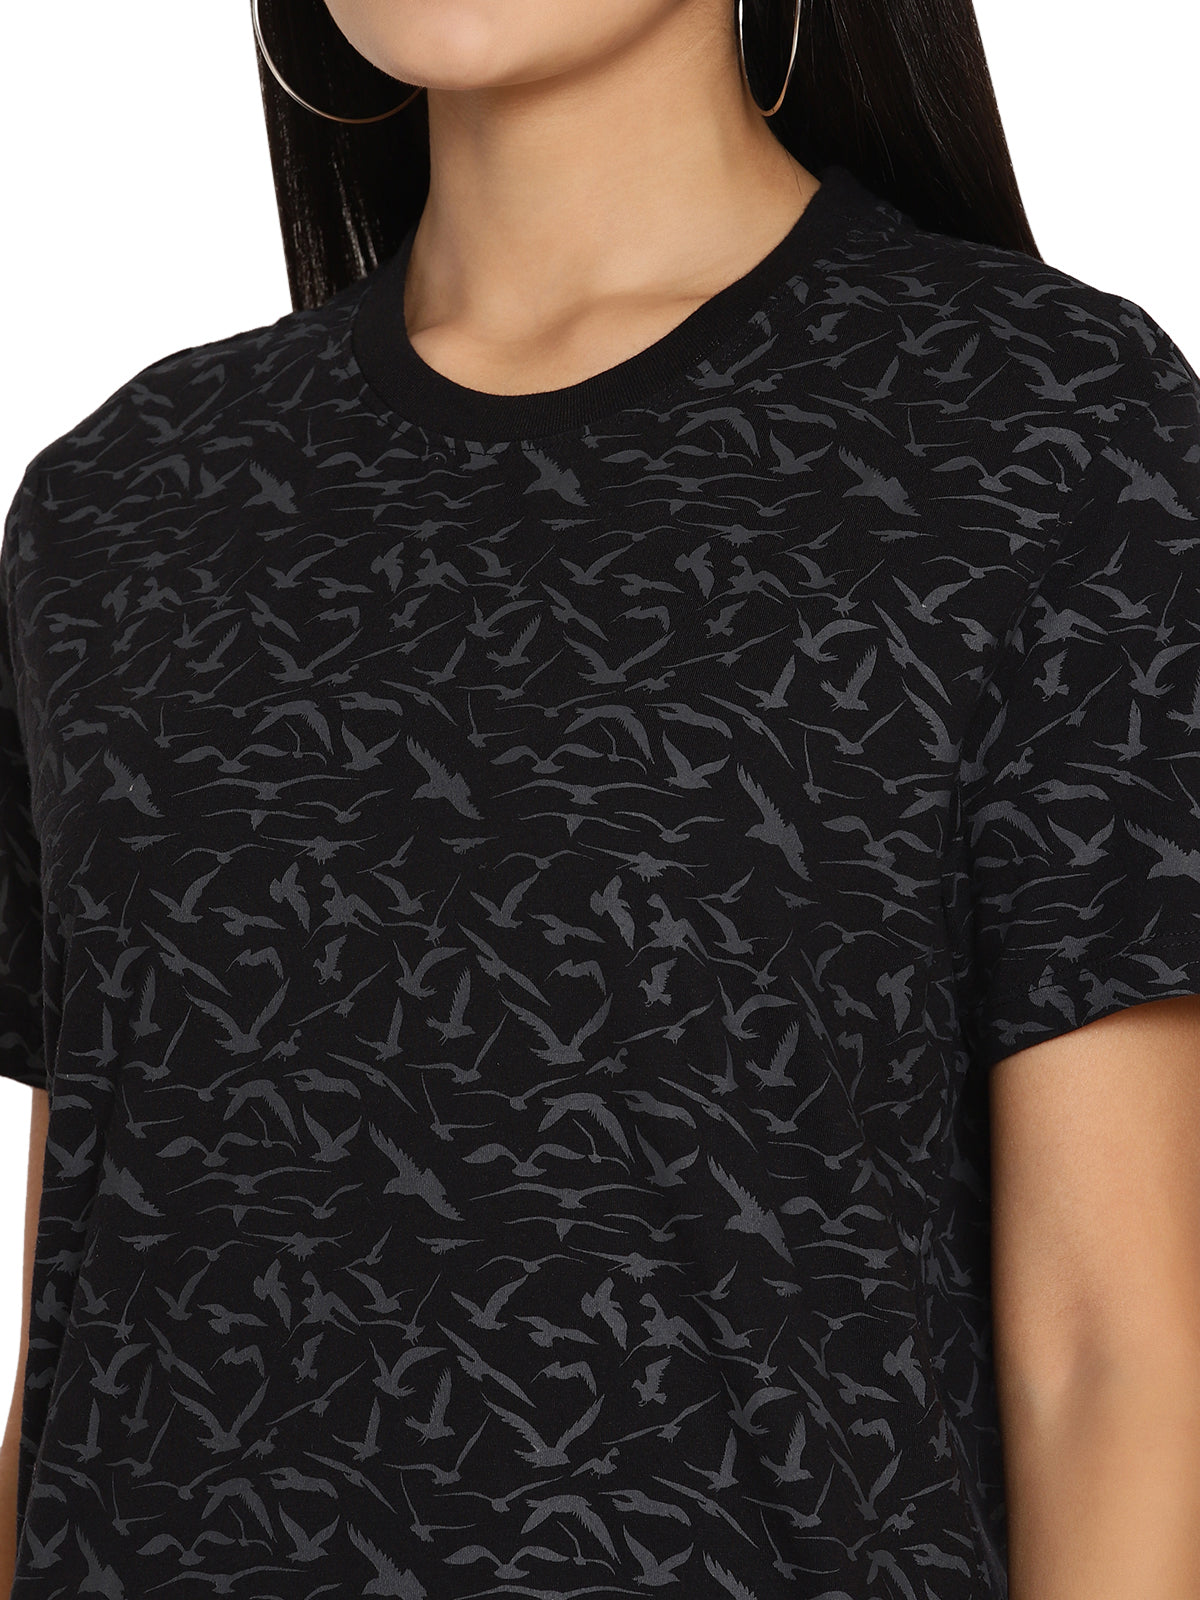 Wolfpack Birds Camo Black Printed Women T-Shirt